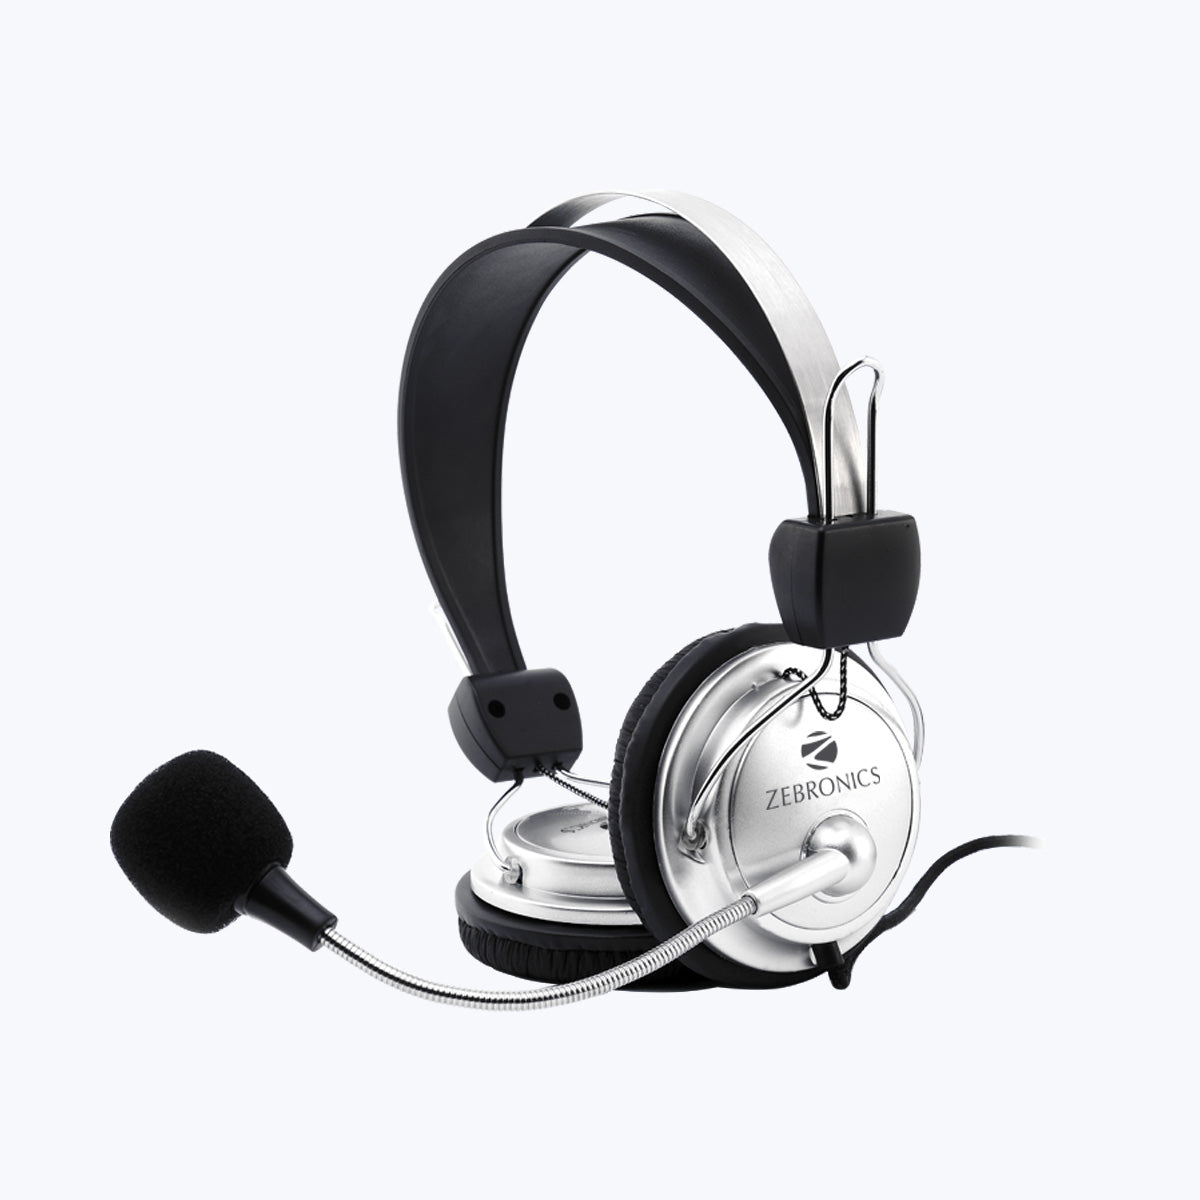 Zeb-1001HMV - Wired Headphone - Zebronics